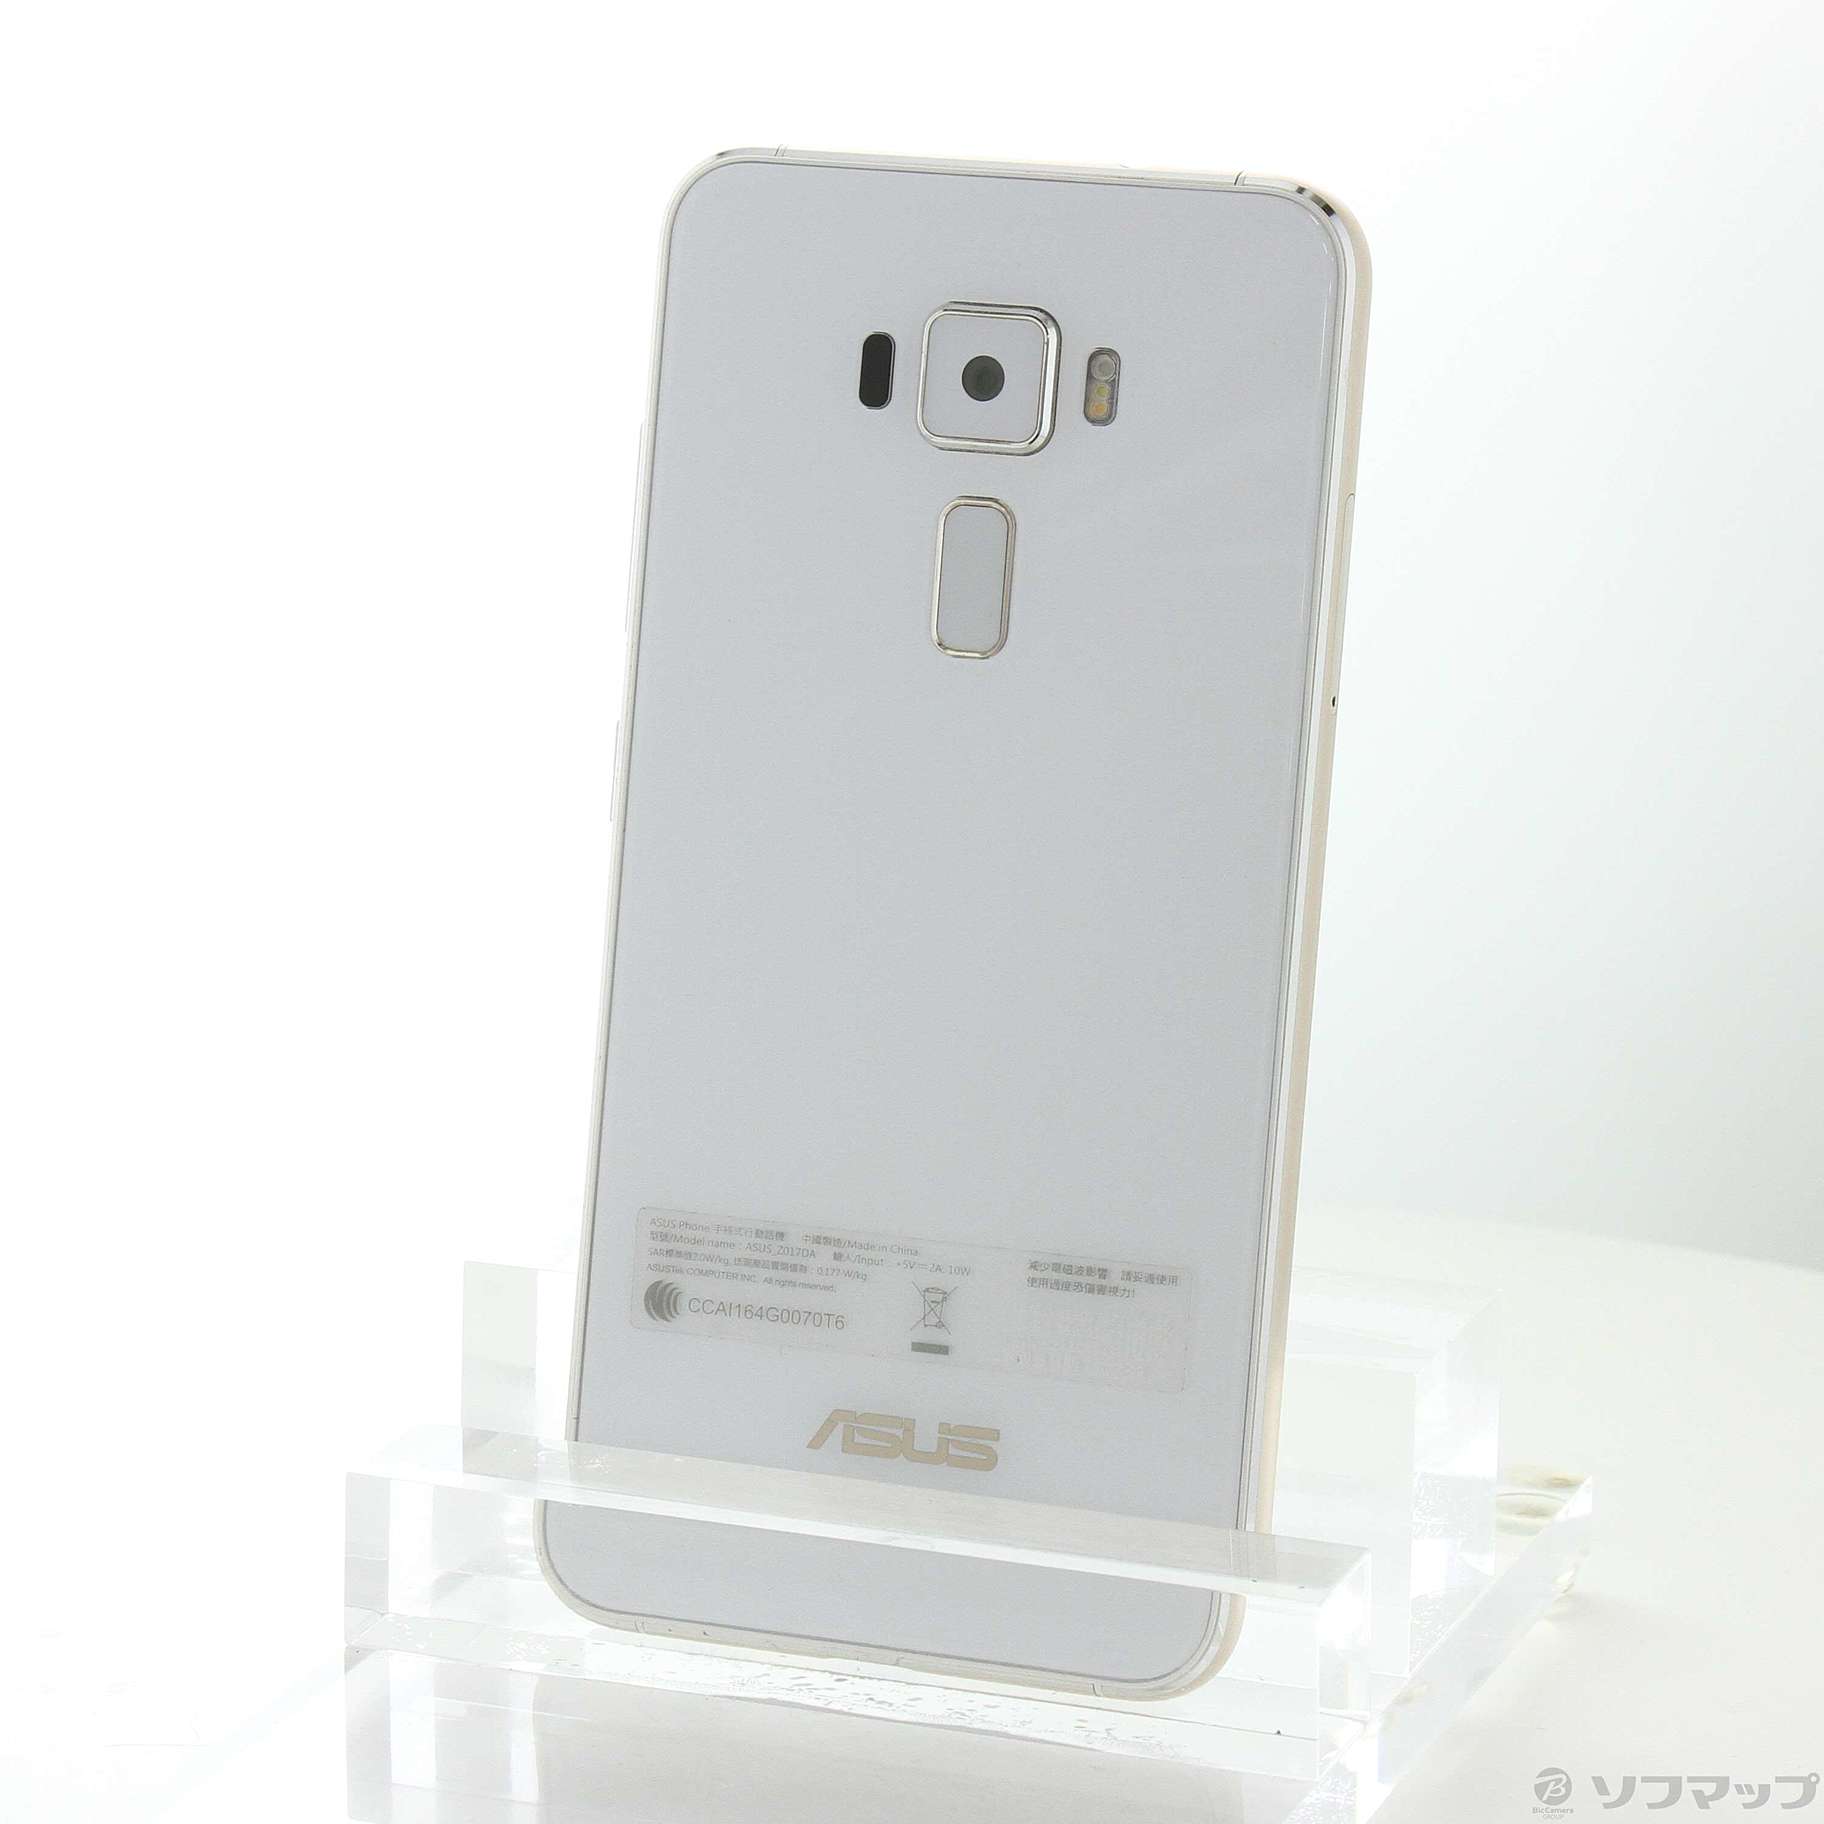 ASUS Zenfone 3 SIMフリー パールホワイト ZE520KL